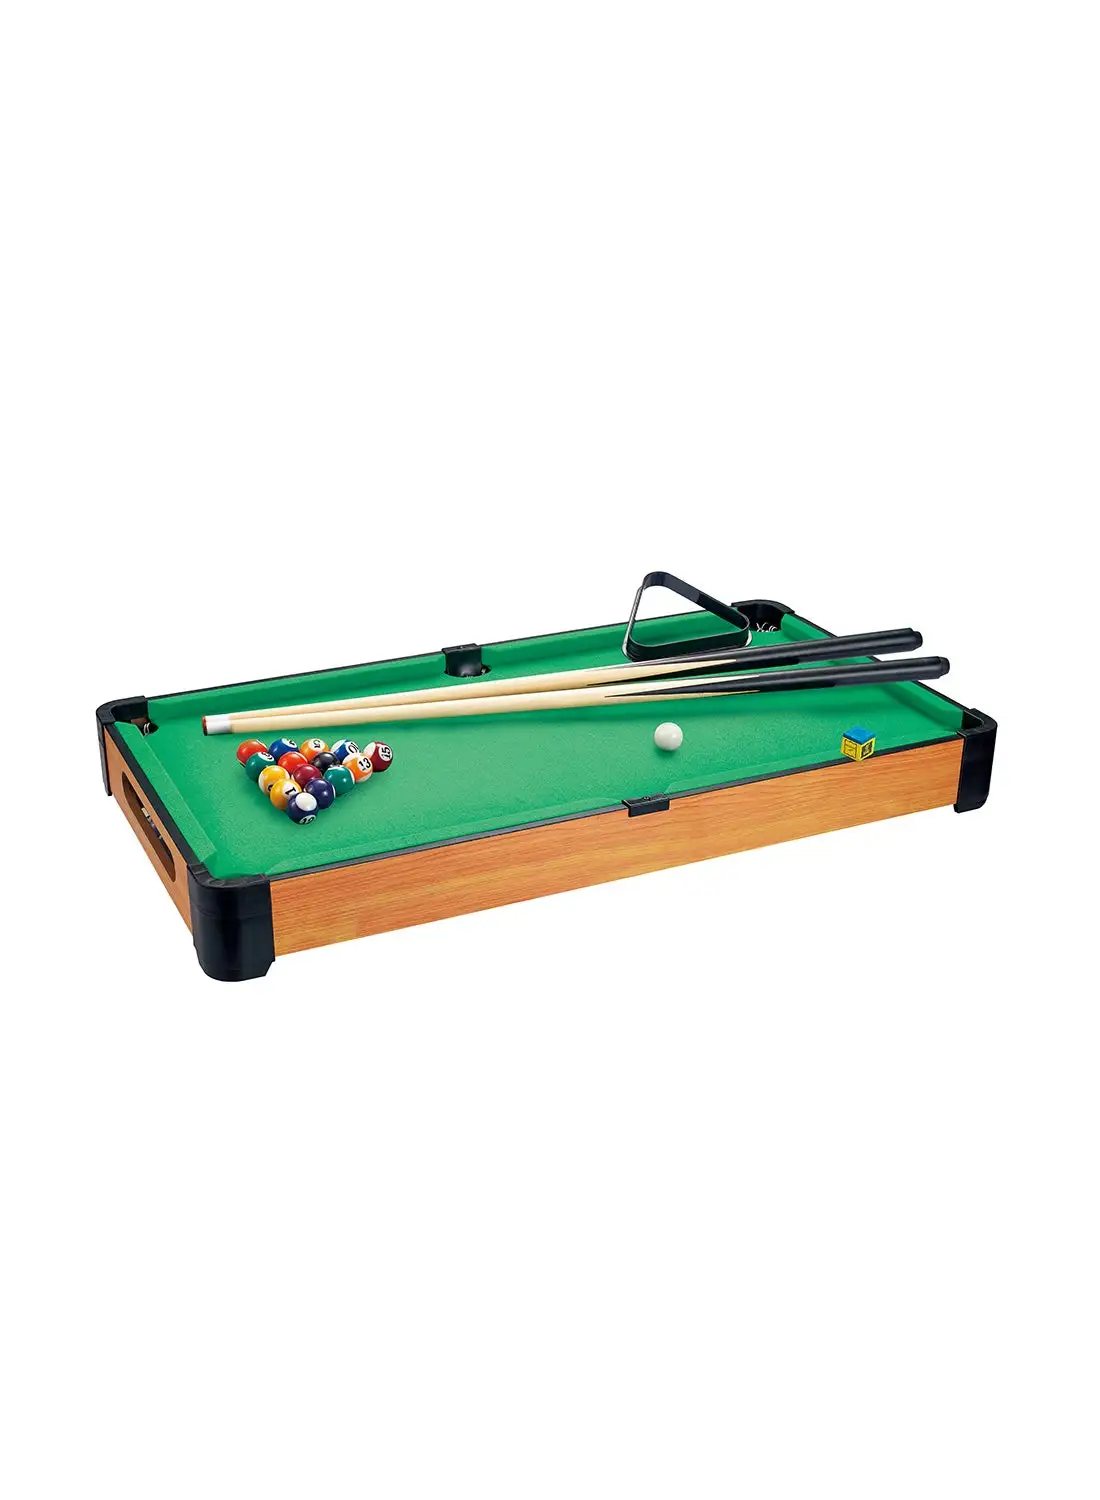 XIANGJUN Billiards Pool Table Game Set 73x39.5x9cm